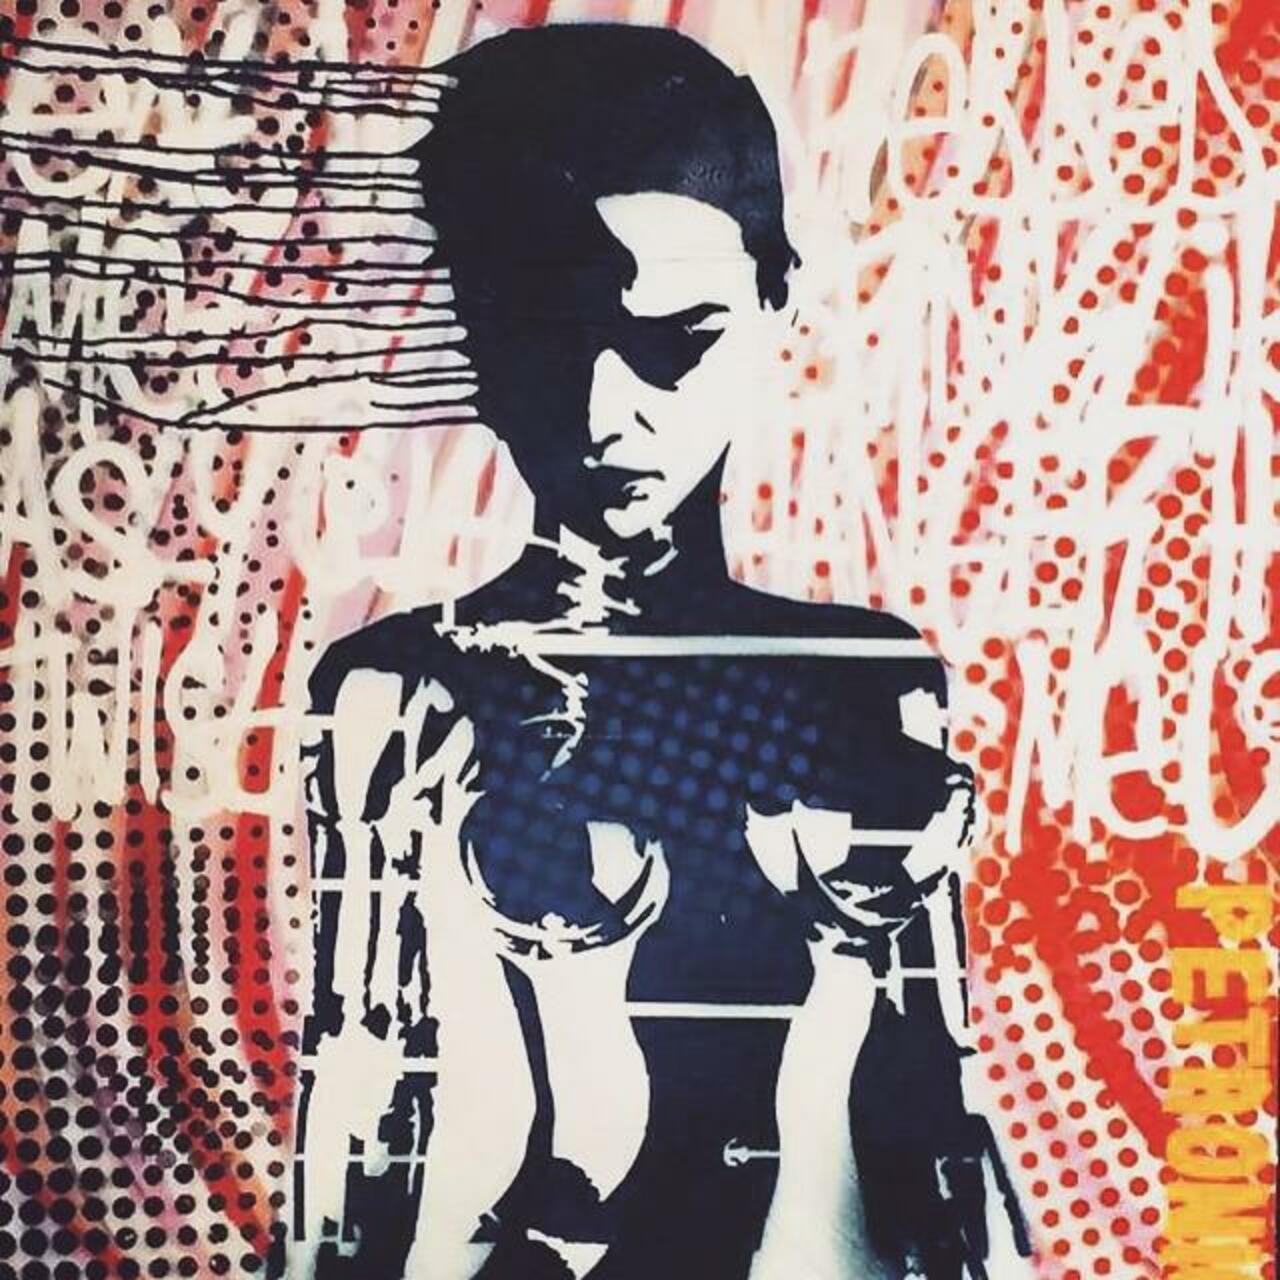 #petronio #popart #pasteup #graff #graffiti #gallery #madcolors #robot #shawart #stencil #spraycan #streetart #inst… http://t.co/sDVJ1bBnPR